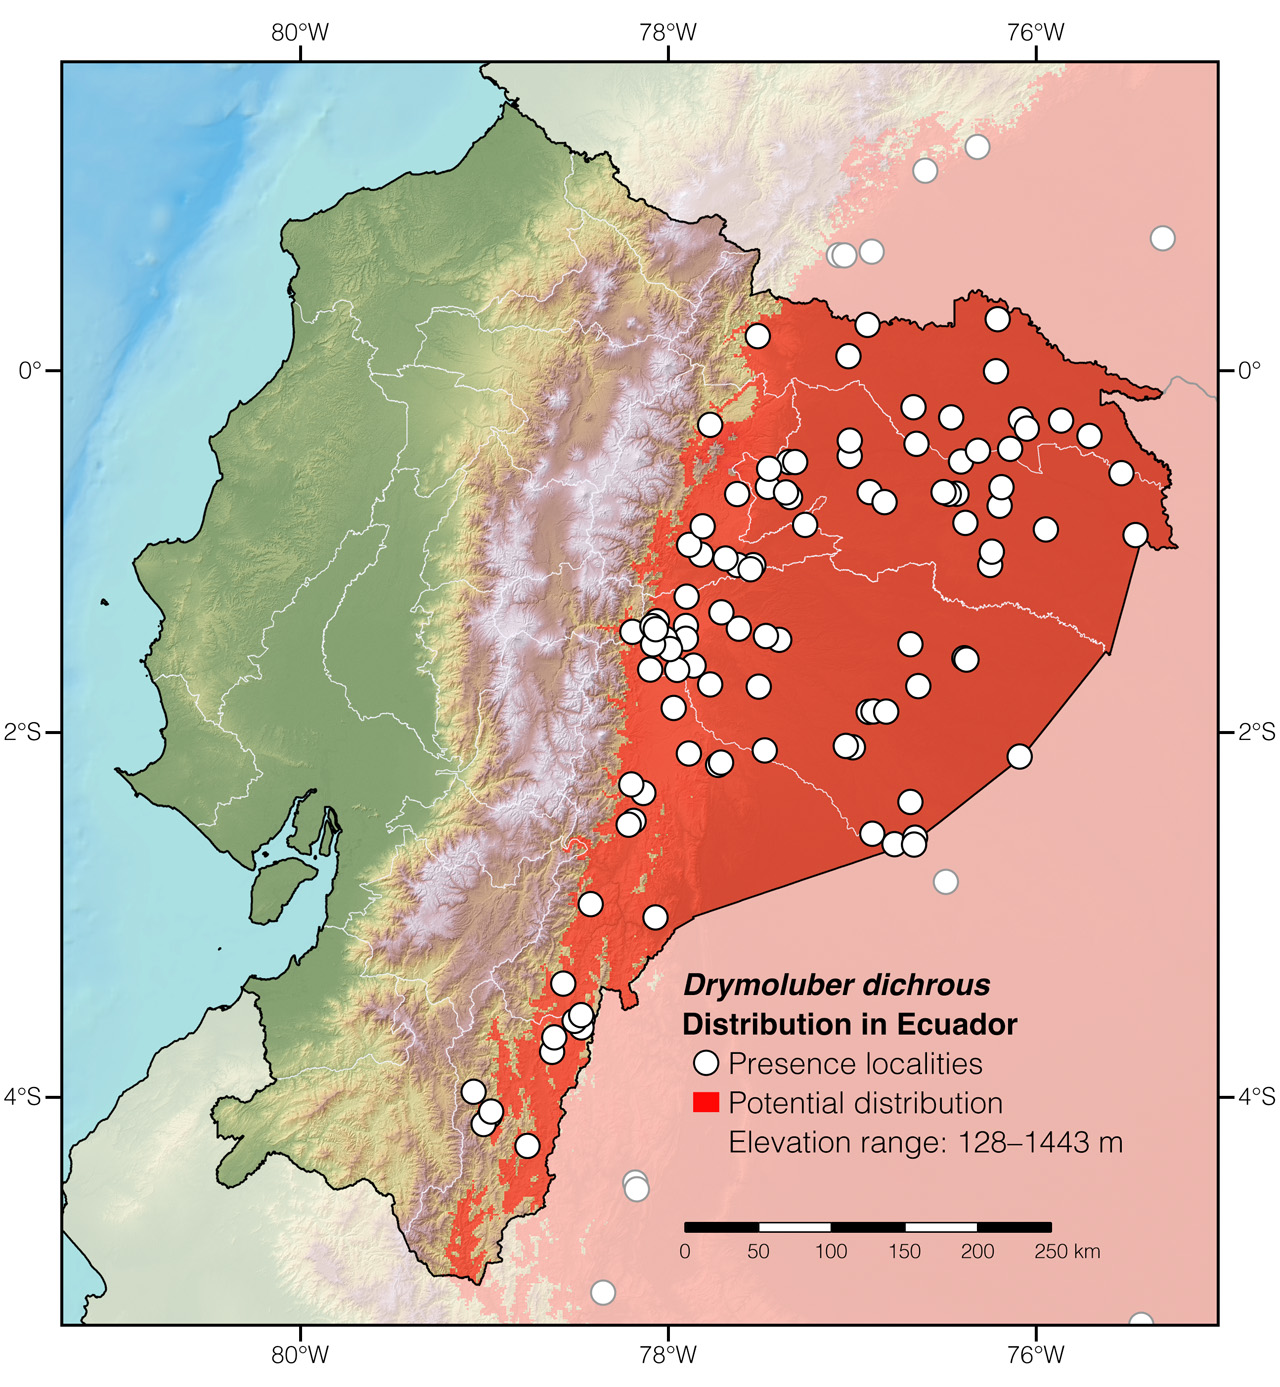 Distribution of Drymoluber dichrous in Ecuador